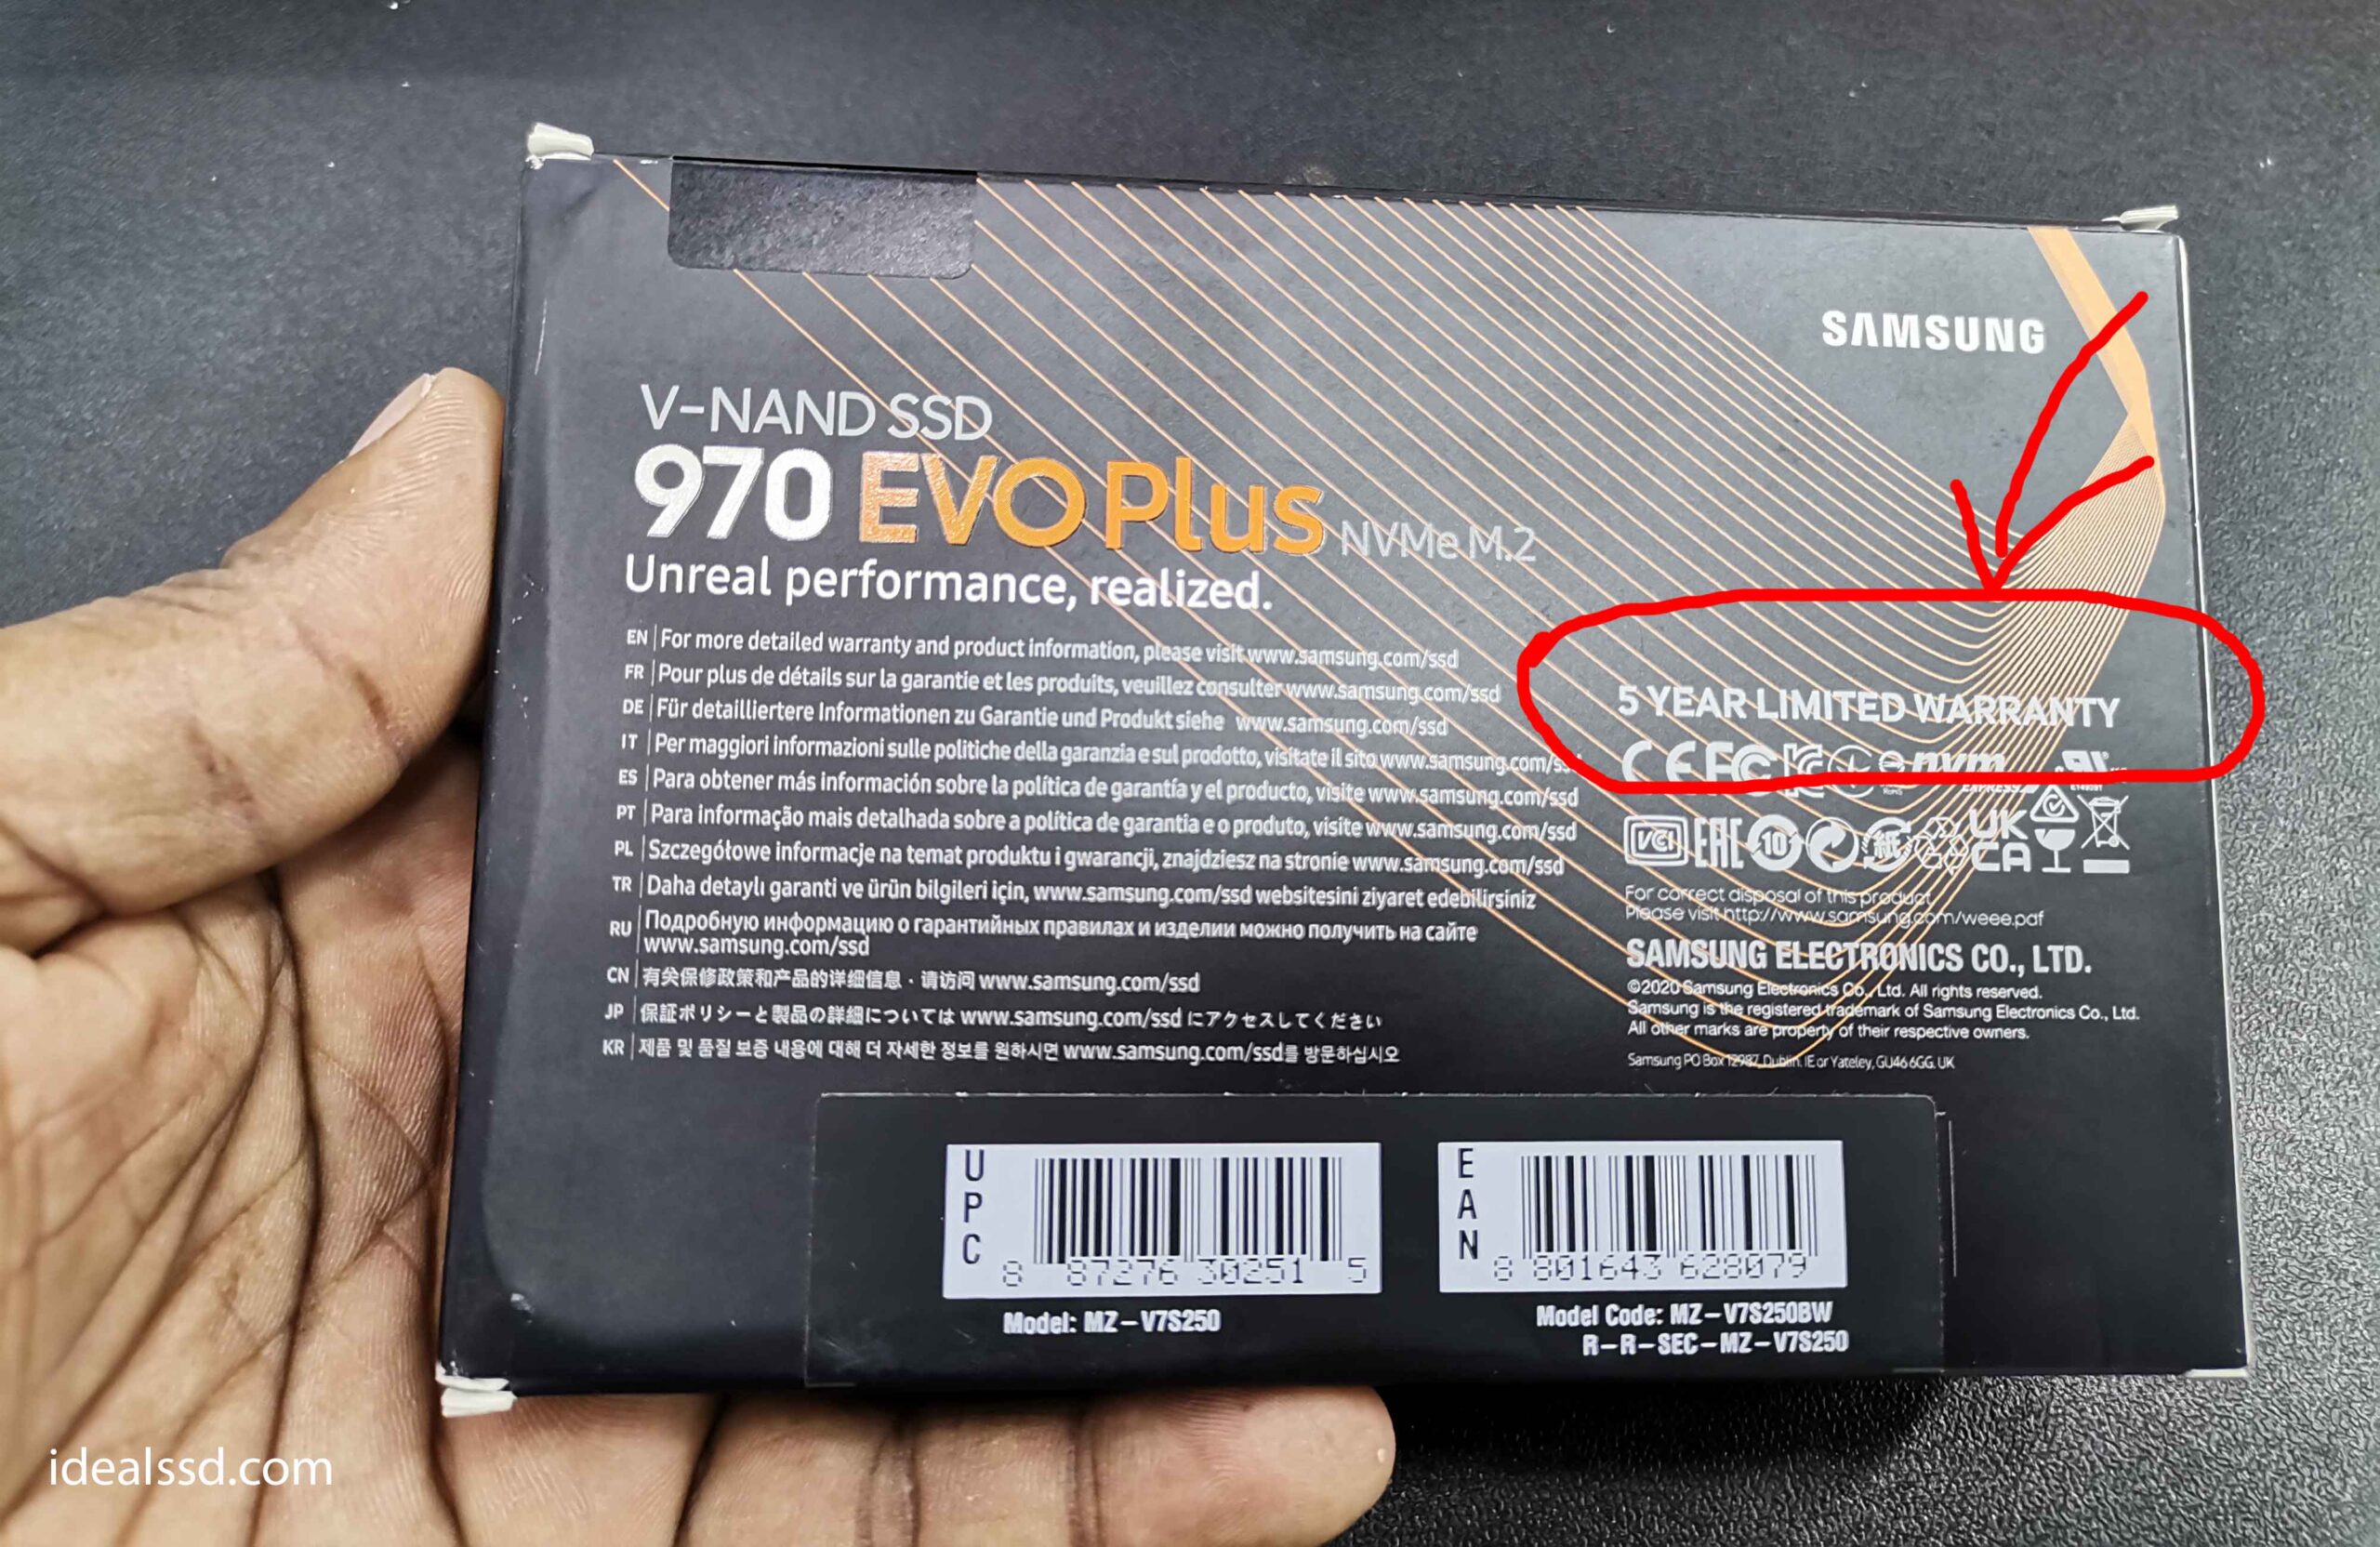 Samsung 970 Evo plus limited warranty